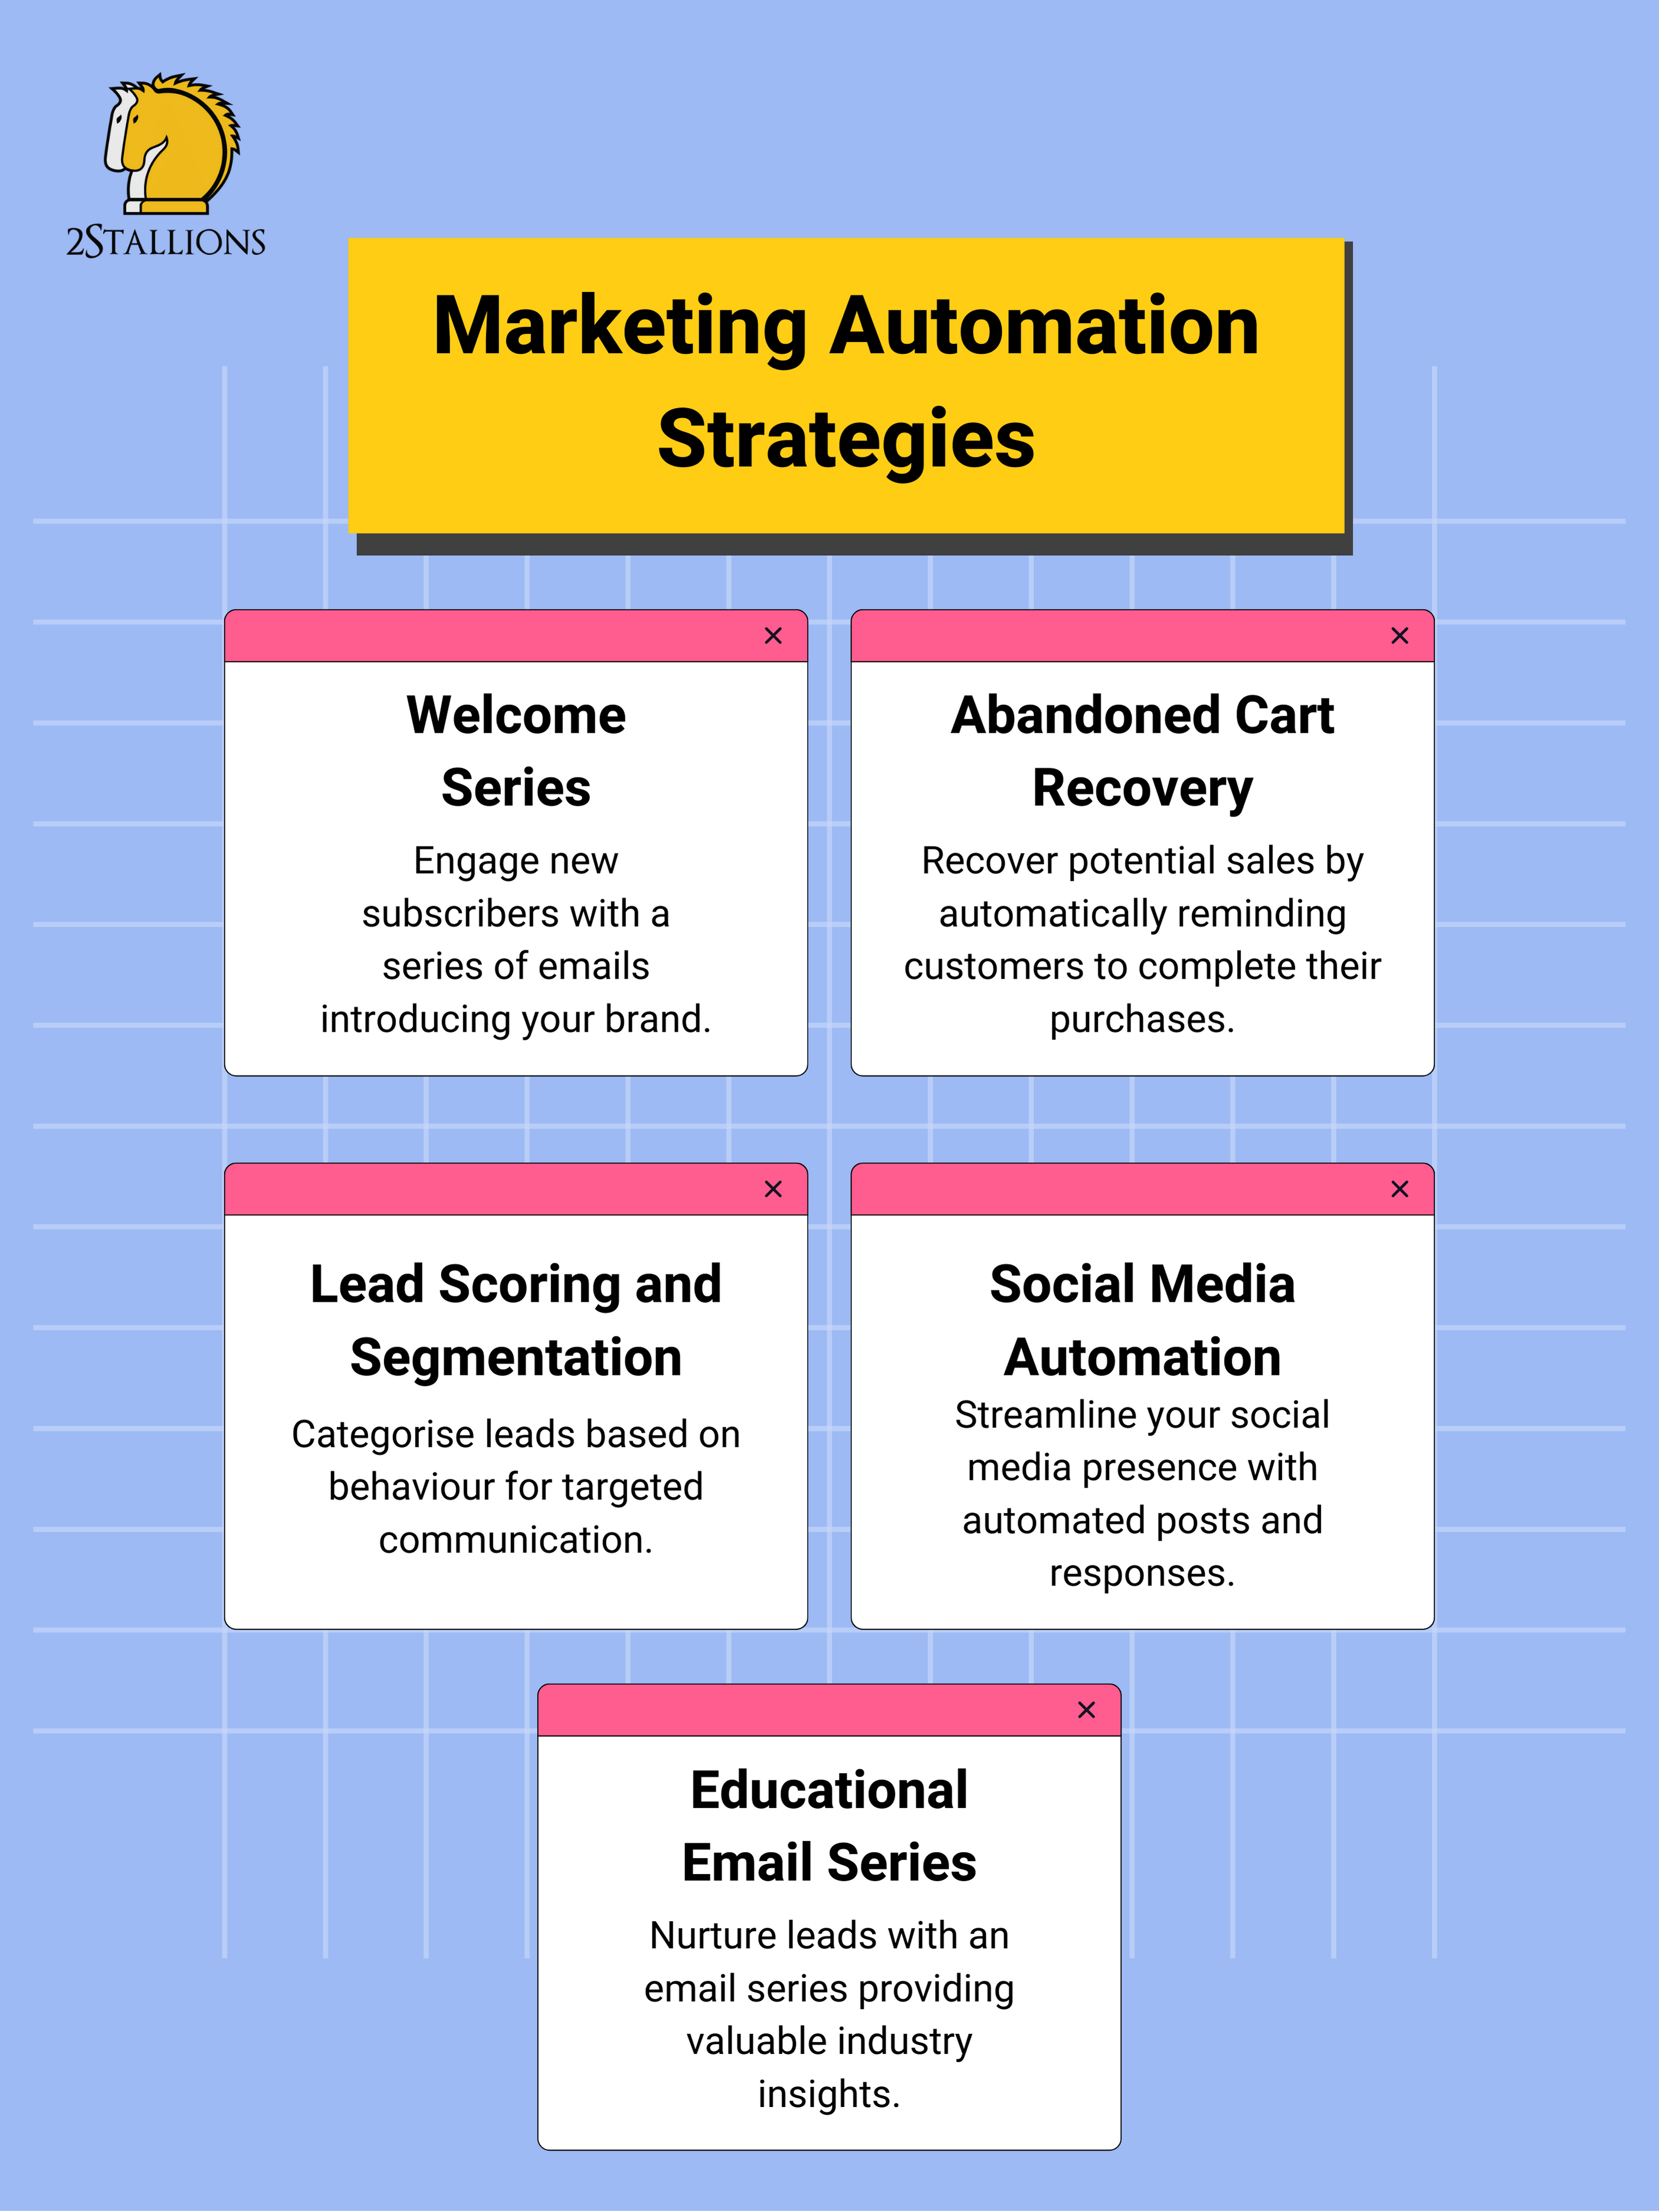 Marketing Automation Strategies | 2Stallions